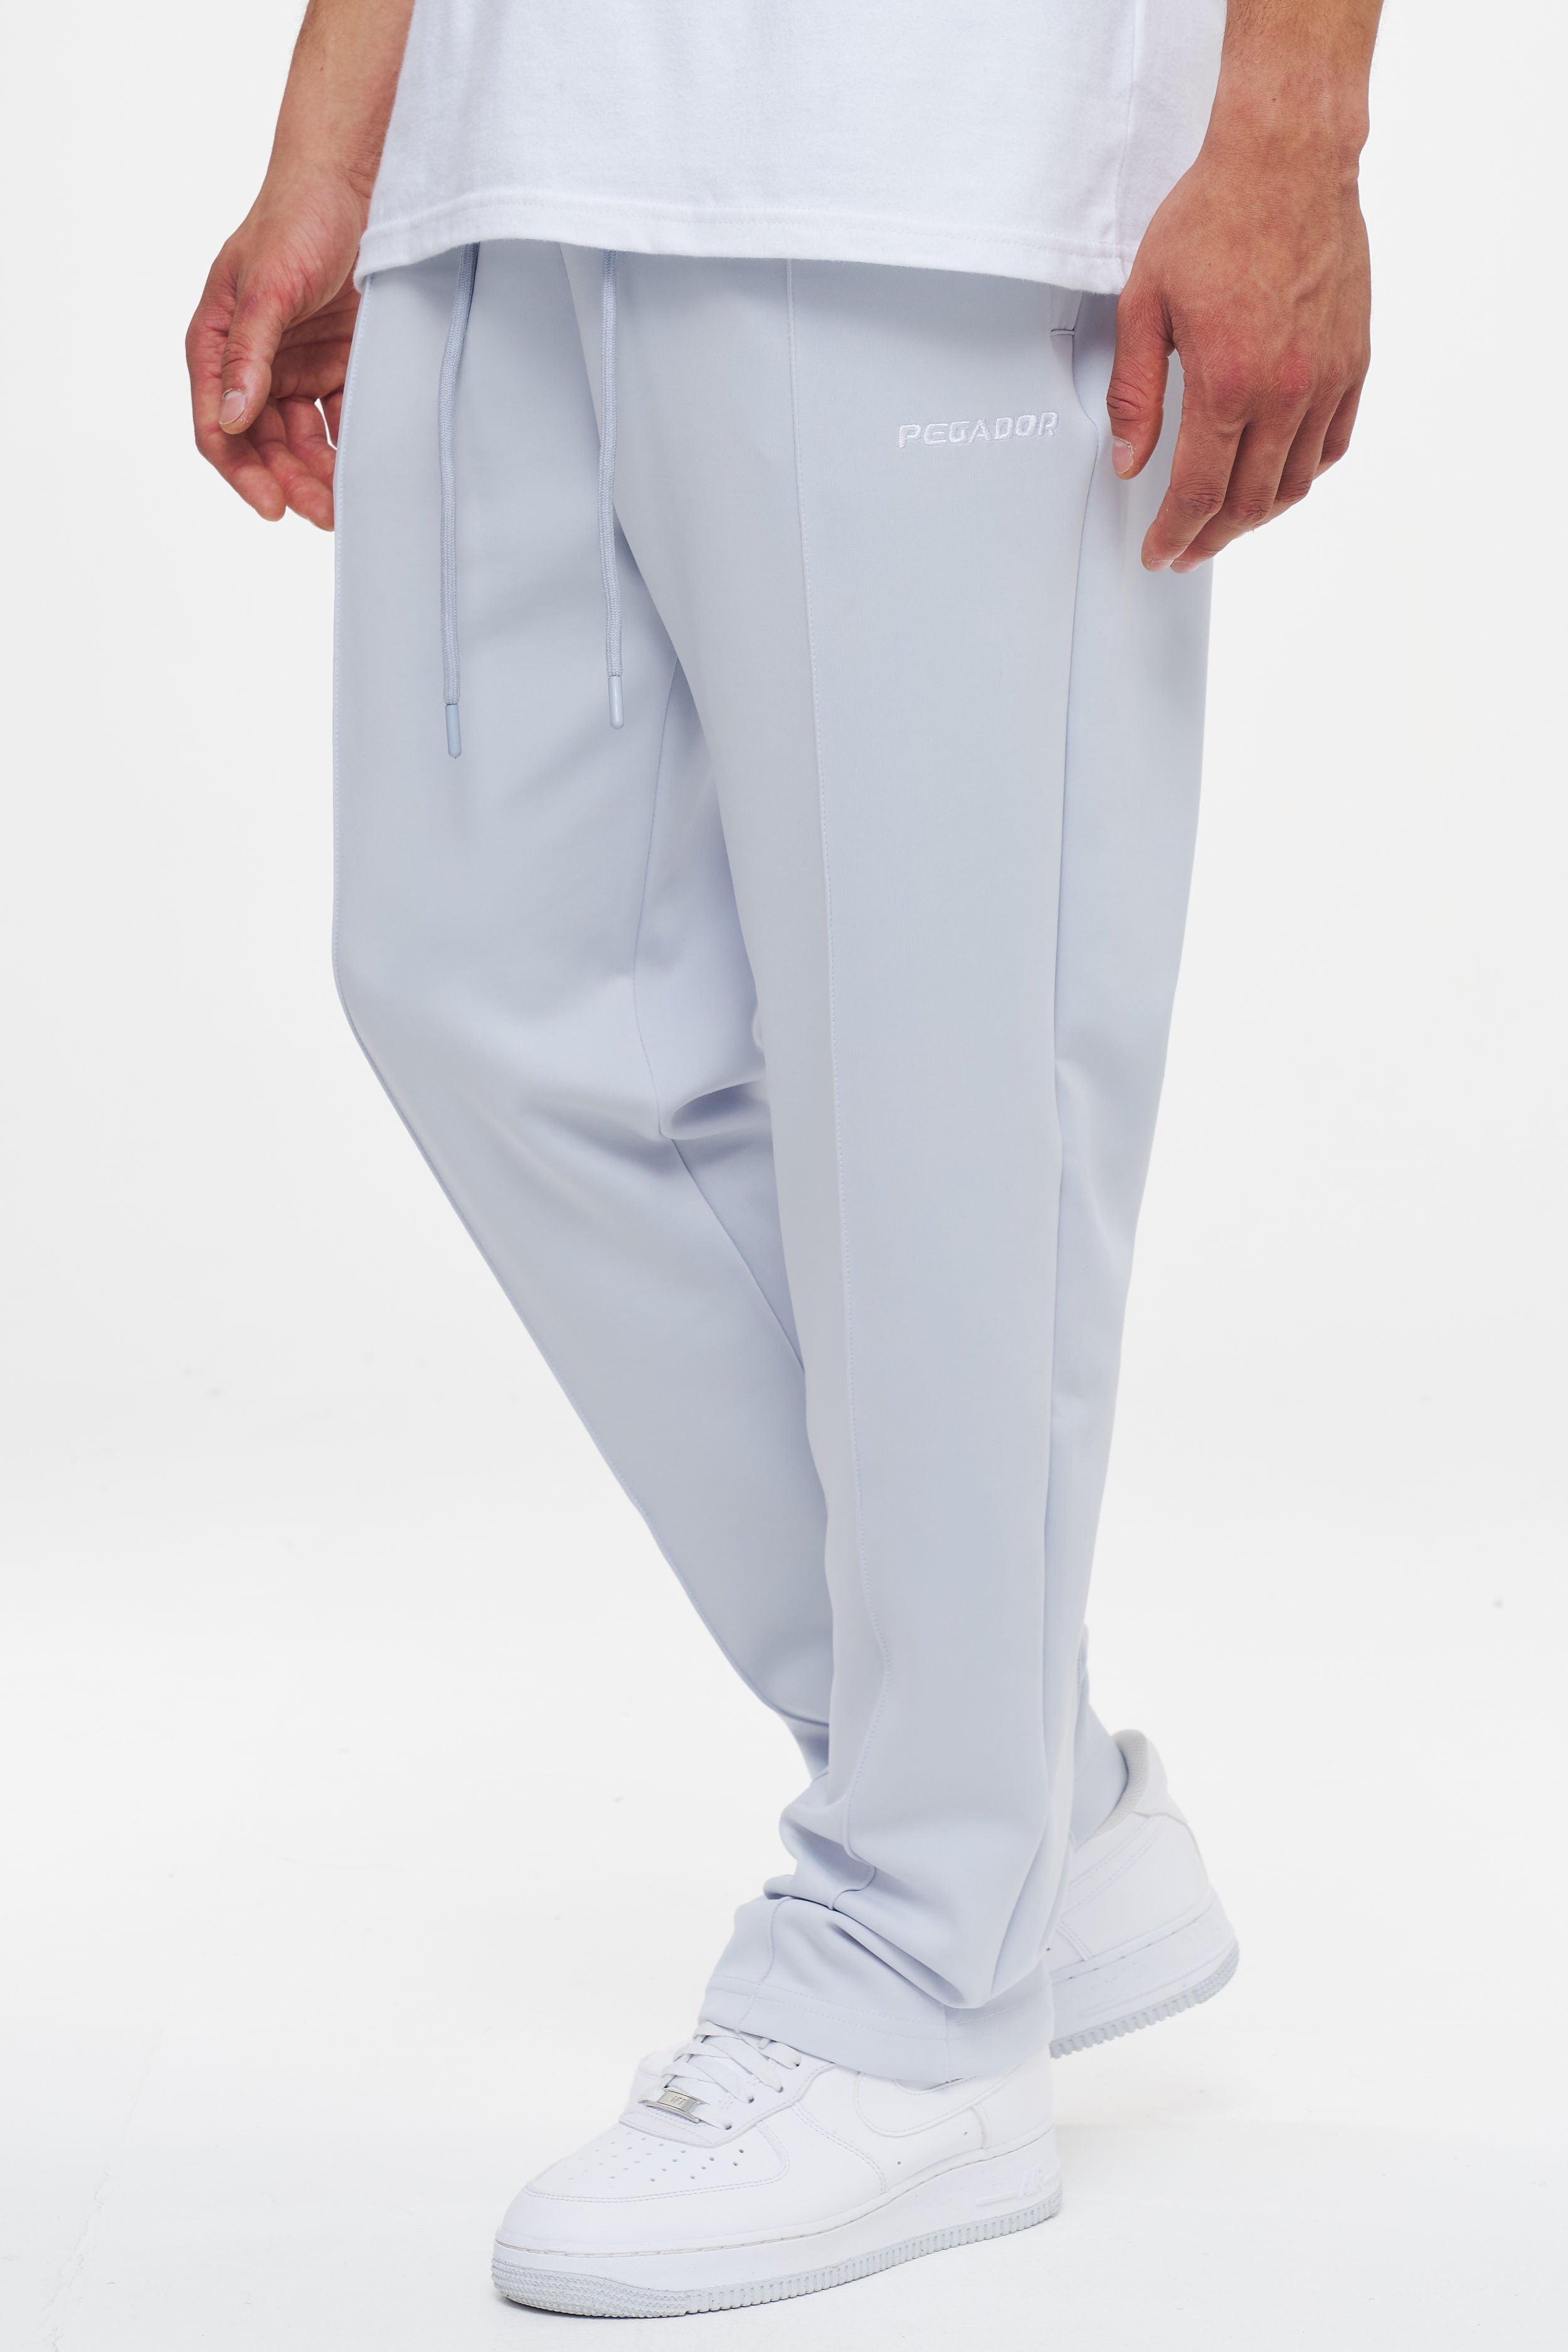 Gap Essentials Full Length Track Pants 1 Stripe Black/White Size L 35-37 |  eBay